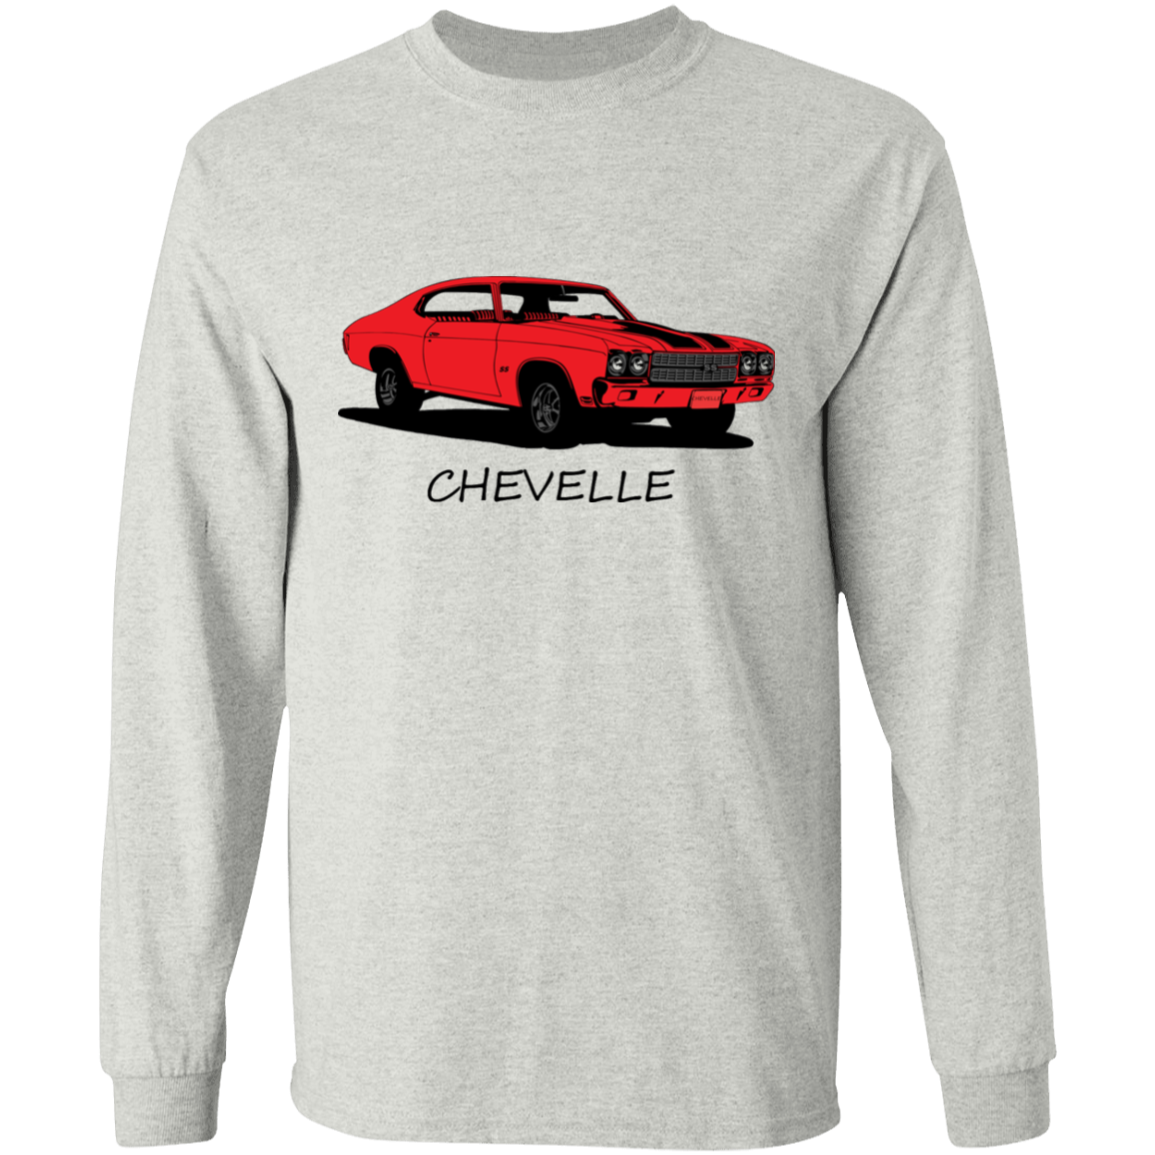 '70 Chevelle long sleeve t'shirt (b)